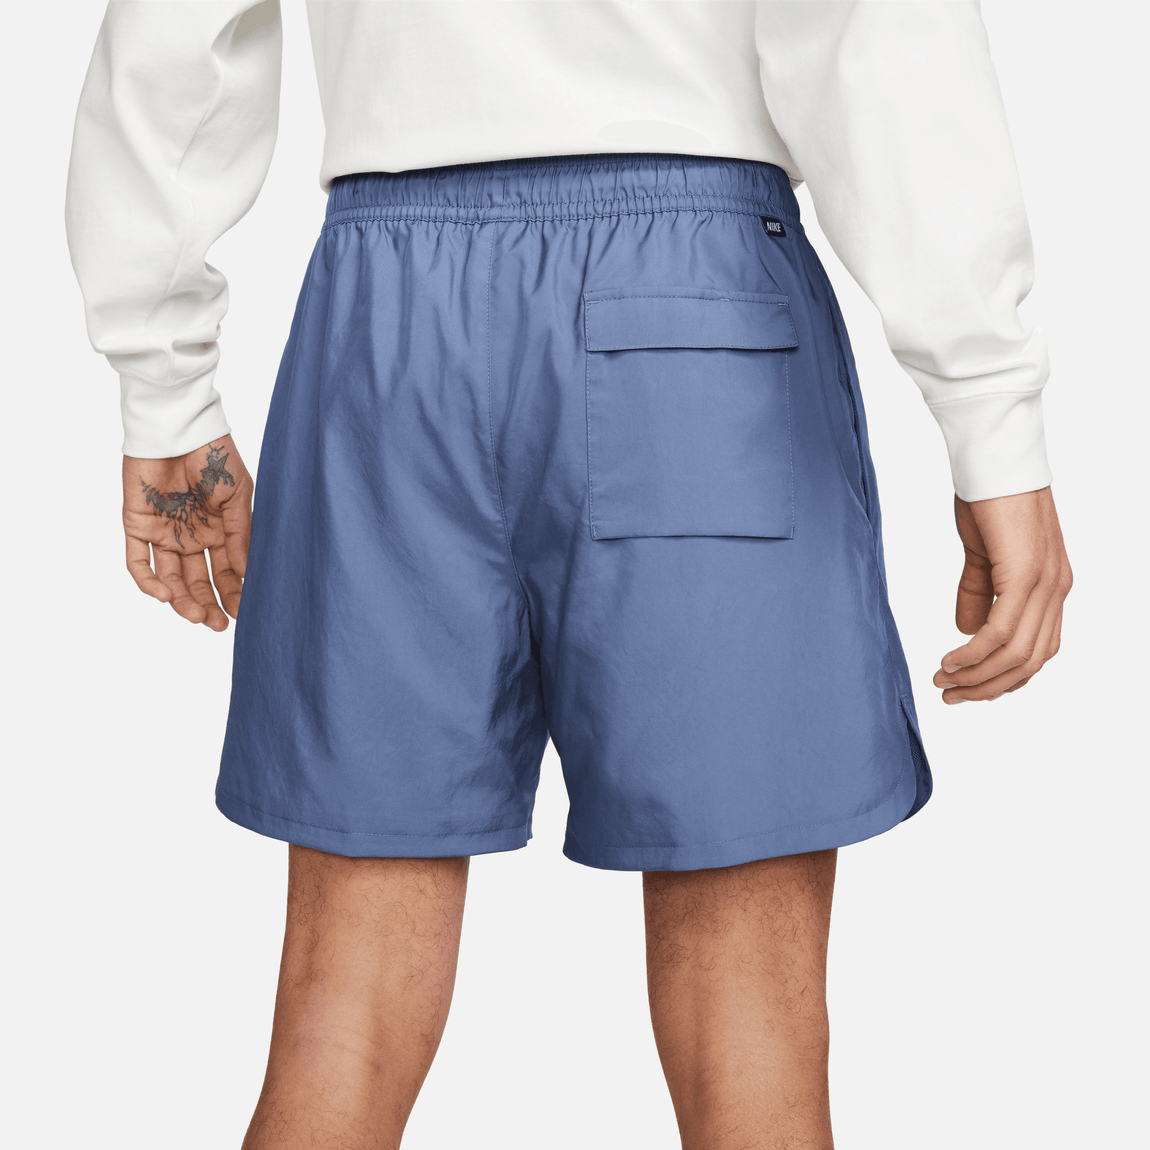 Nike Sportswear Sport Essentials Shorts (Diffused Blue/White) - Nike Sportswear Sport Essentials Shorts (Diffused Blue/White) - 